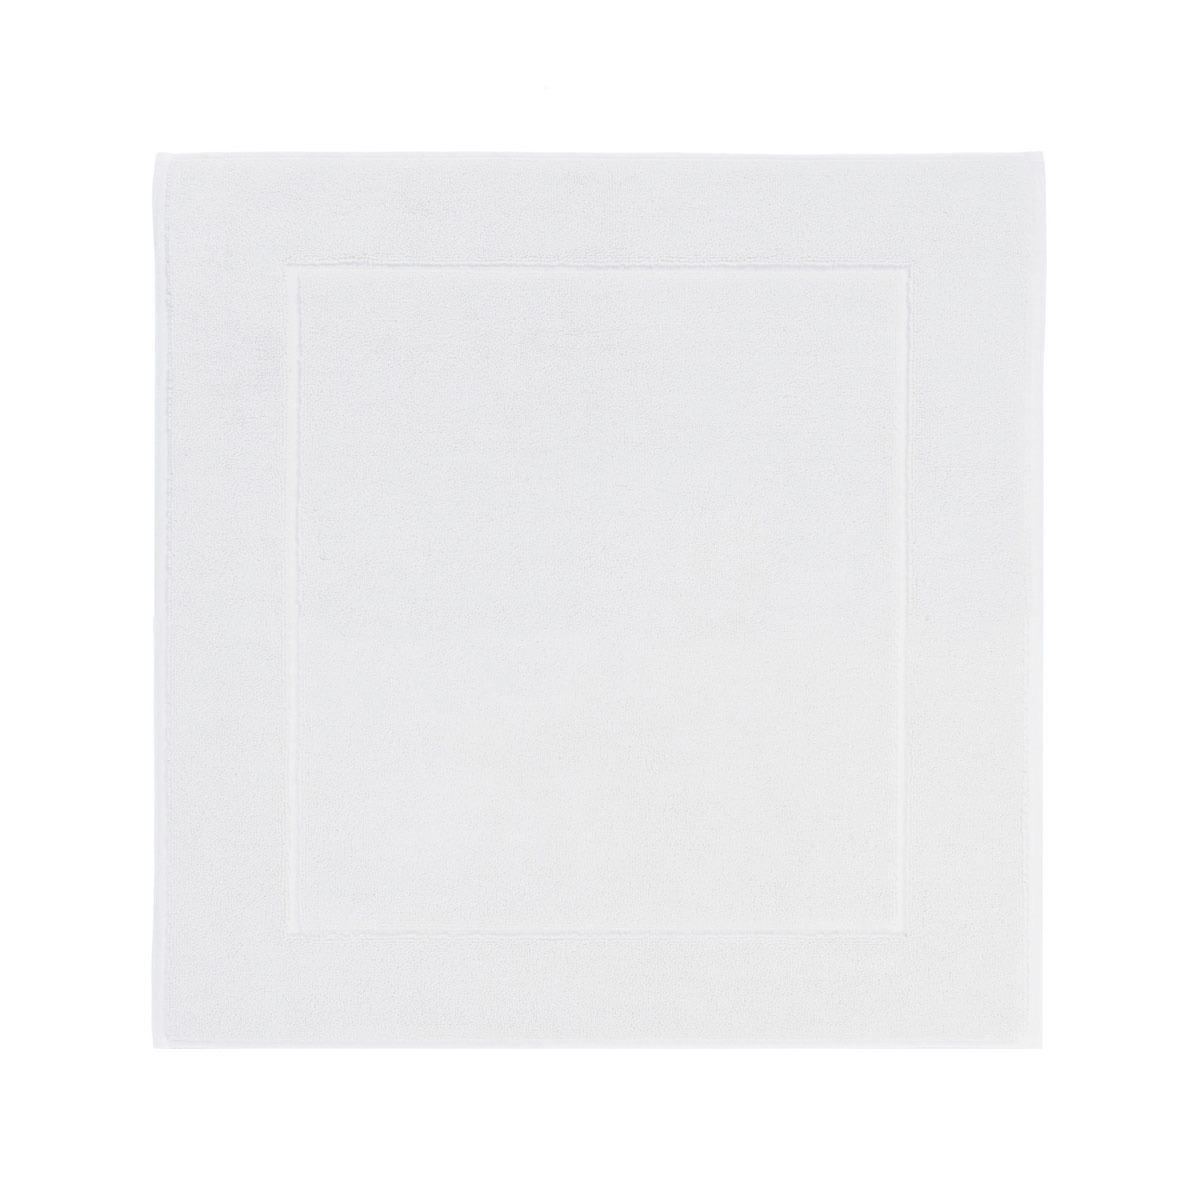 BADEMATTE London 60/60 cm  - Weiß, Basics, Kunststoff/Textil (60/60cm) - Aquanova